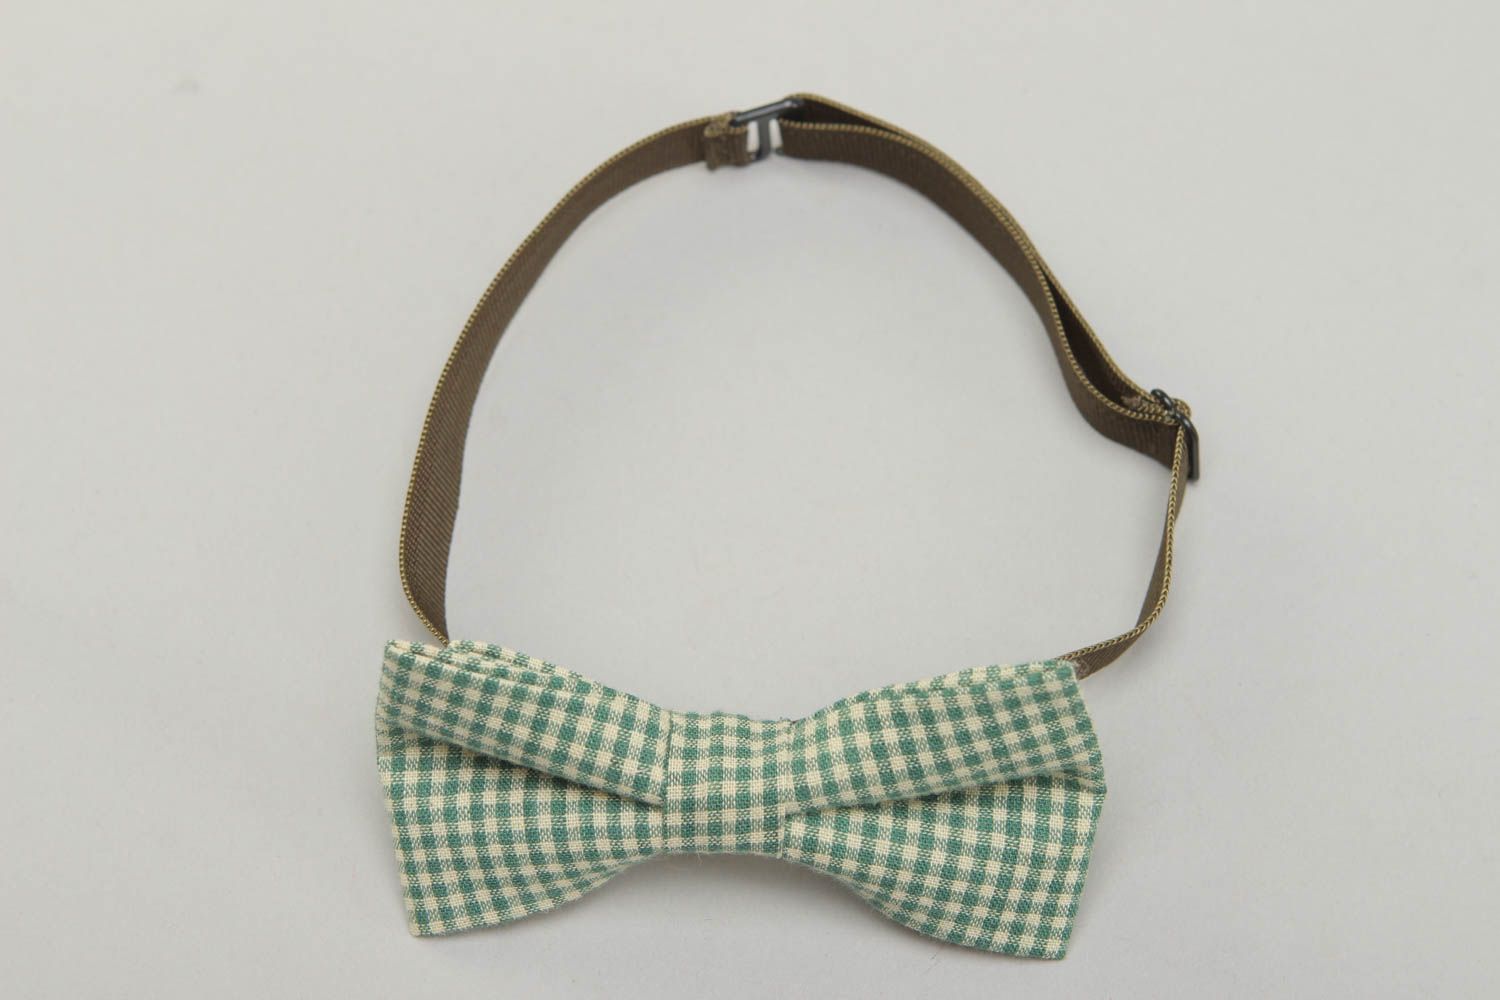 Unusual cotton fabric bow tie photo 1